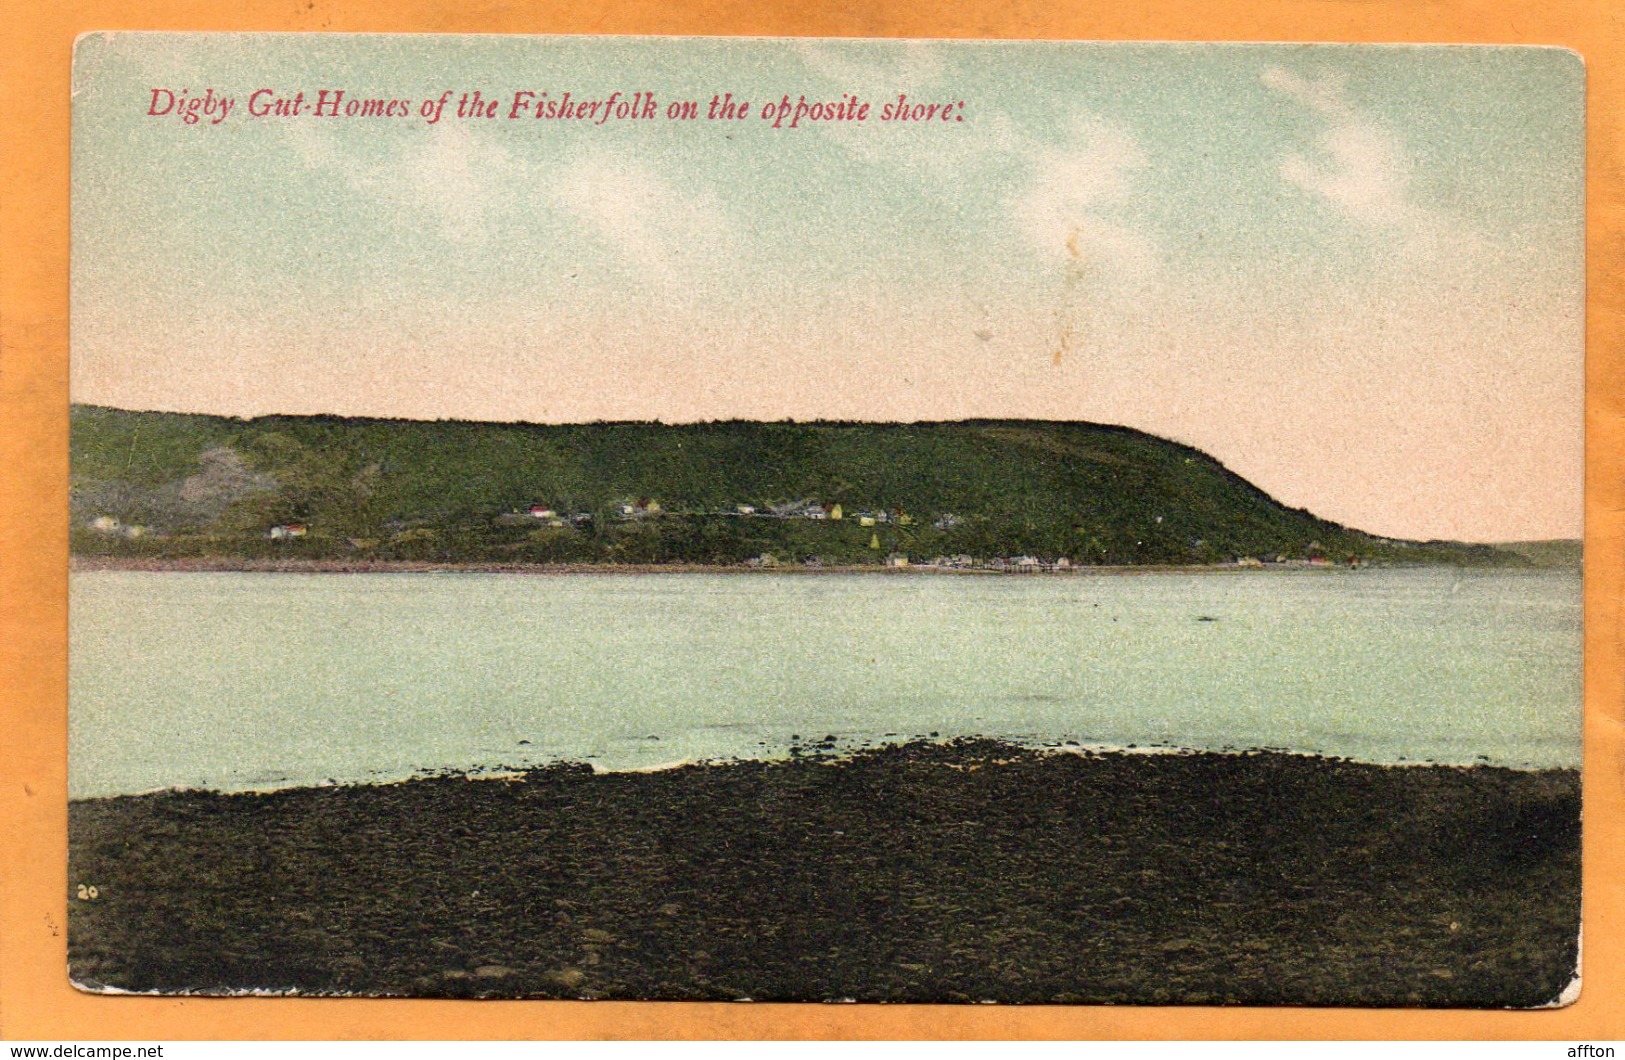 Digby New Scotia Canada 1908 Postcard - Yarmouth